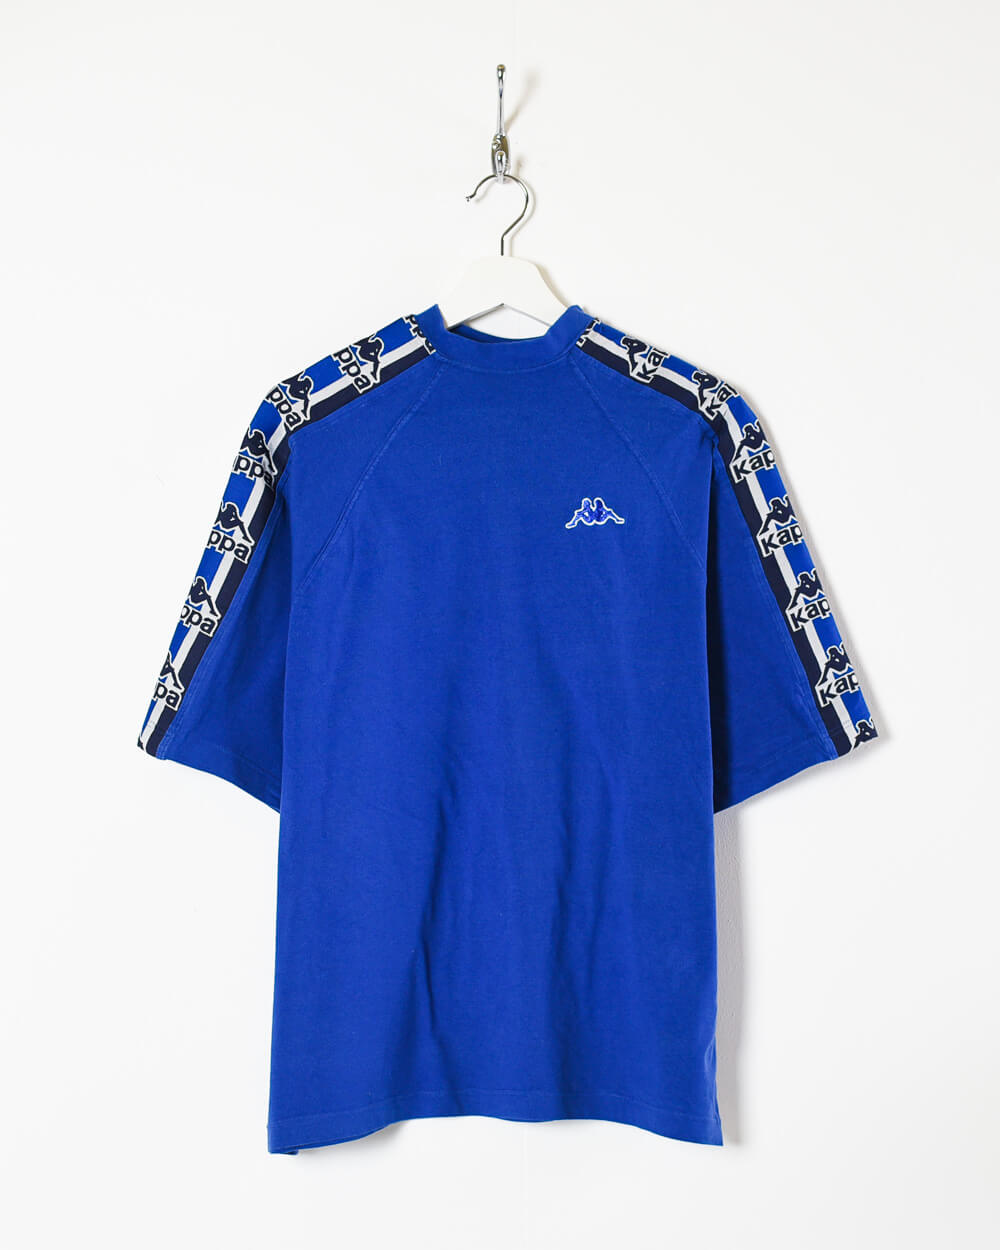 Blue Kappa T-Shirt - Small